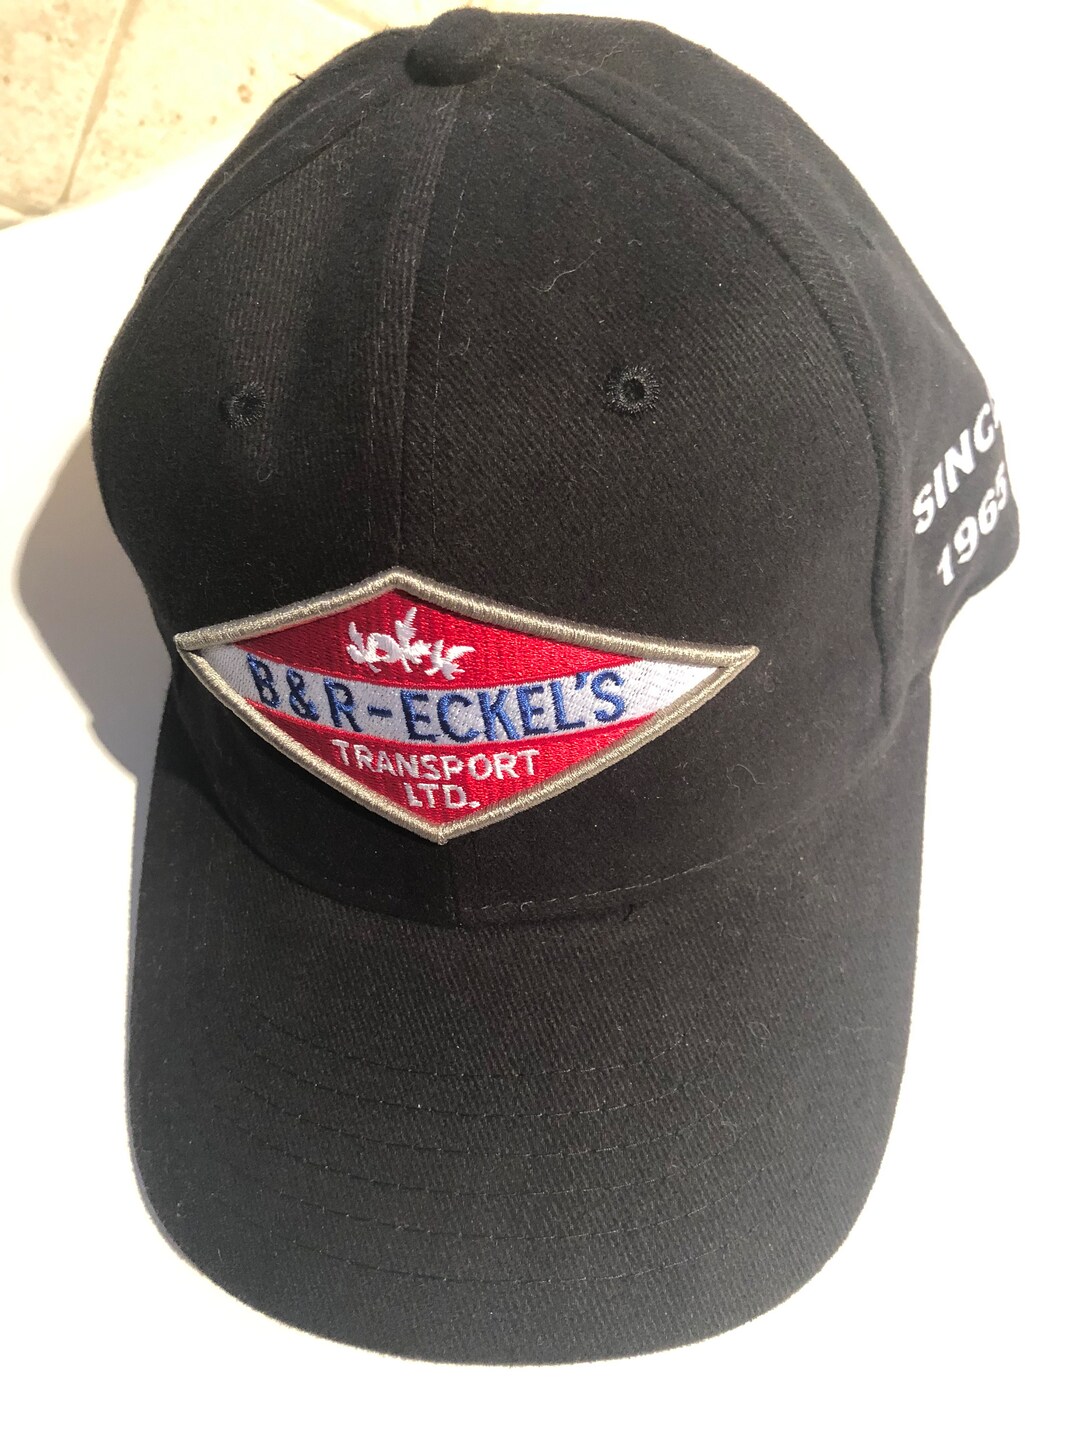 Vintage B&R Eckels Transport Ltd Black Baseball Hat - Etsy